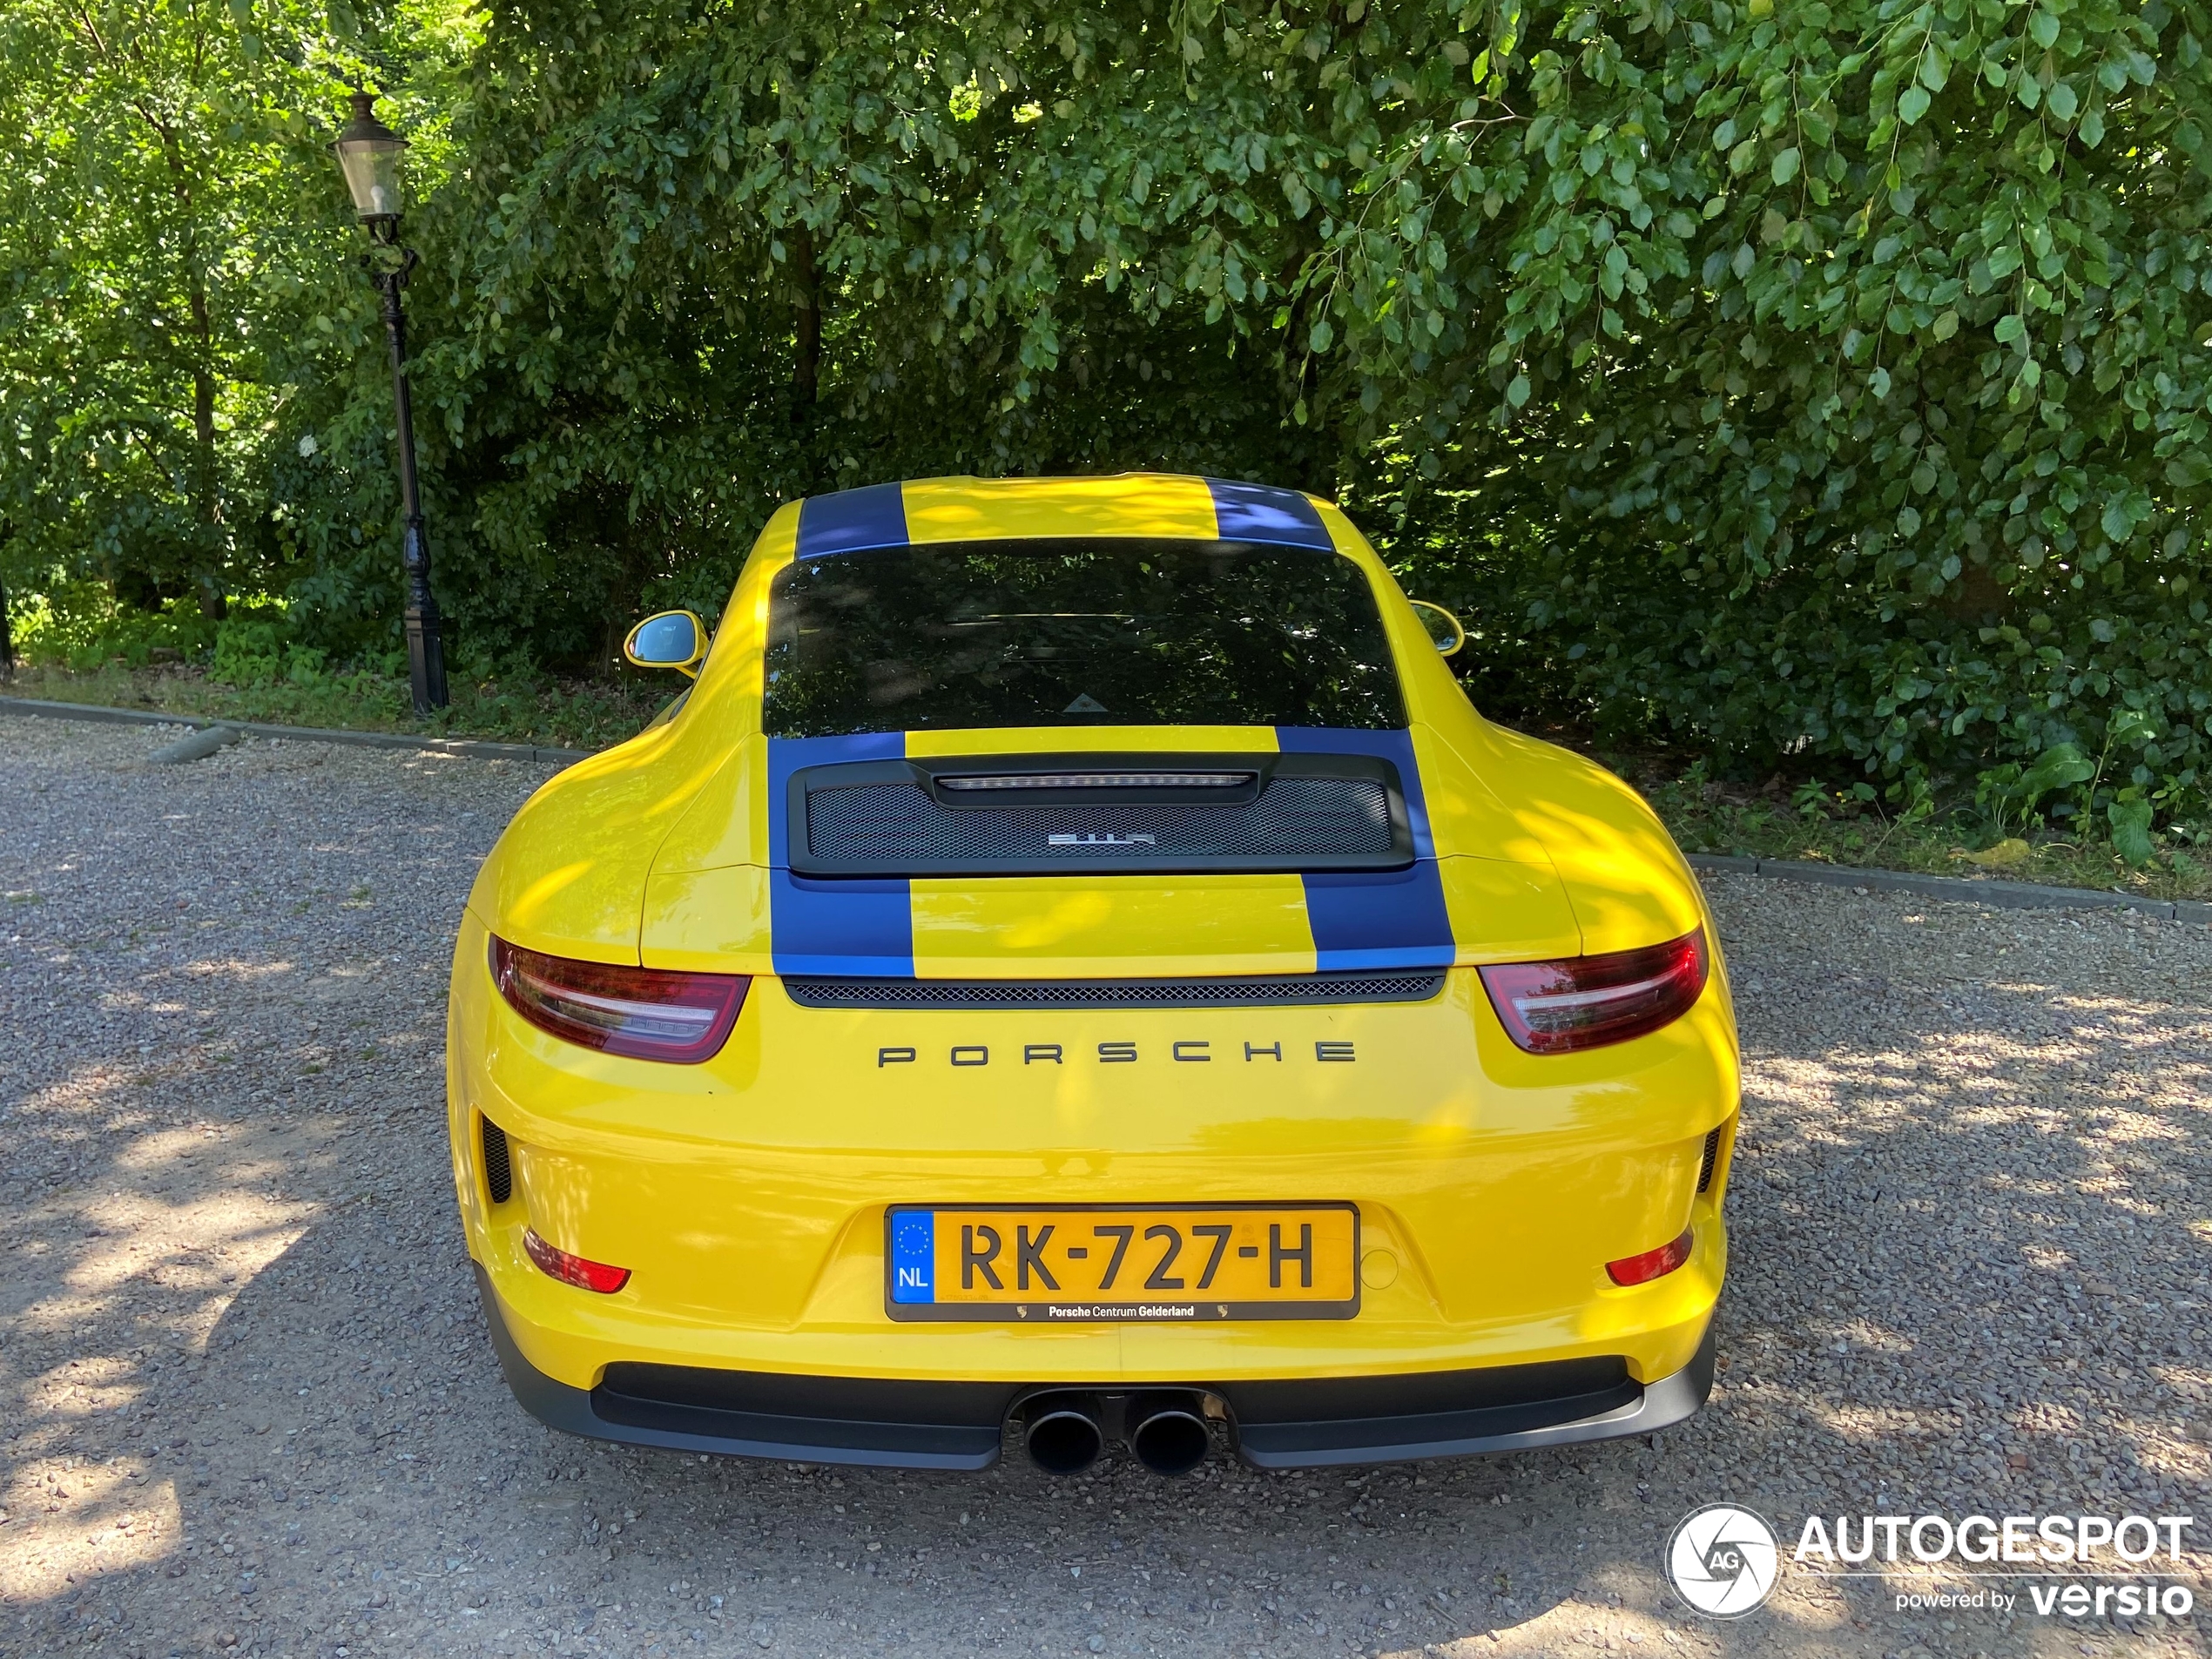 A rare sighting: a yellow 911 R